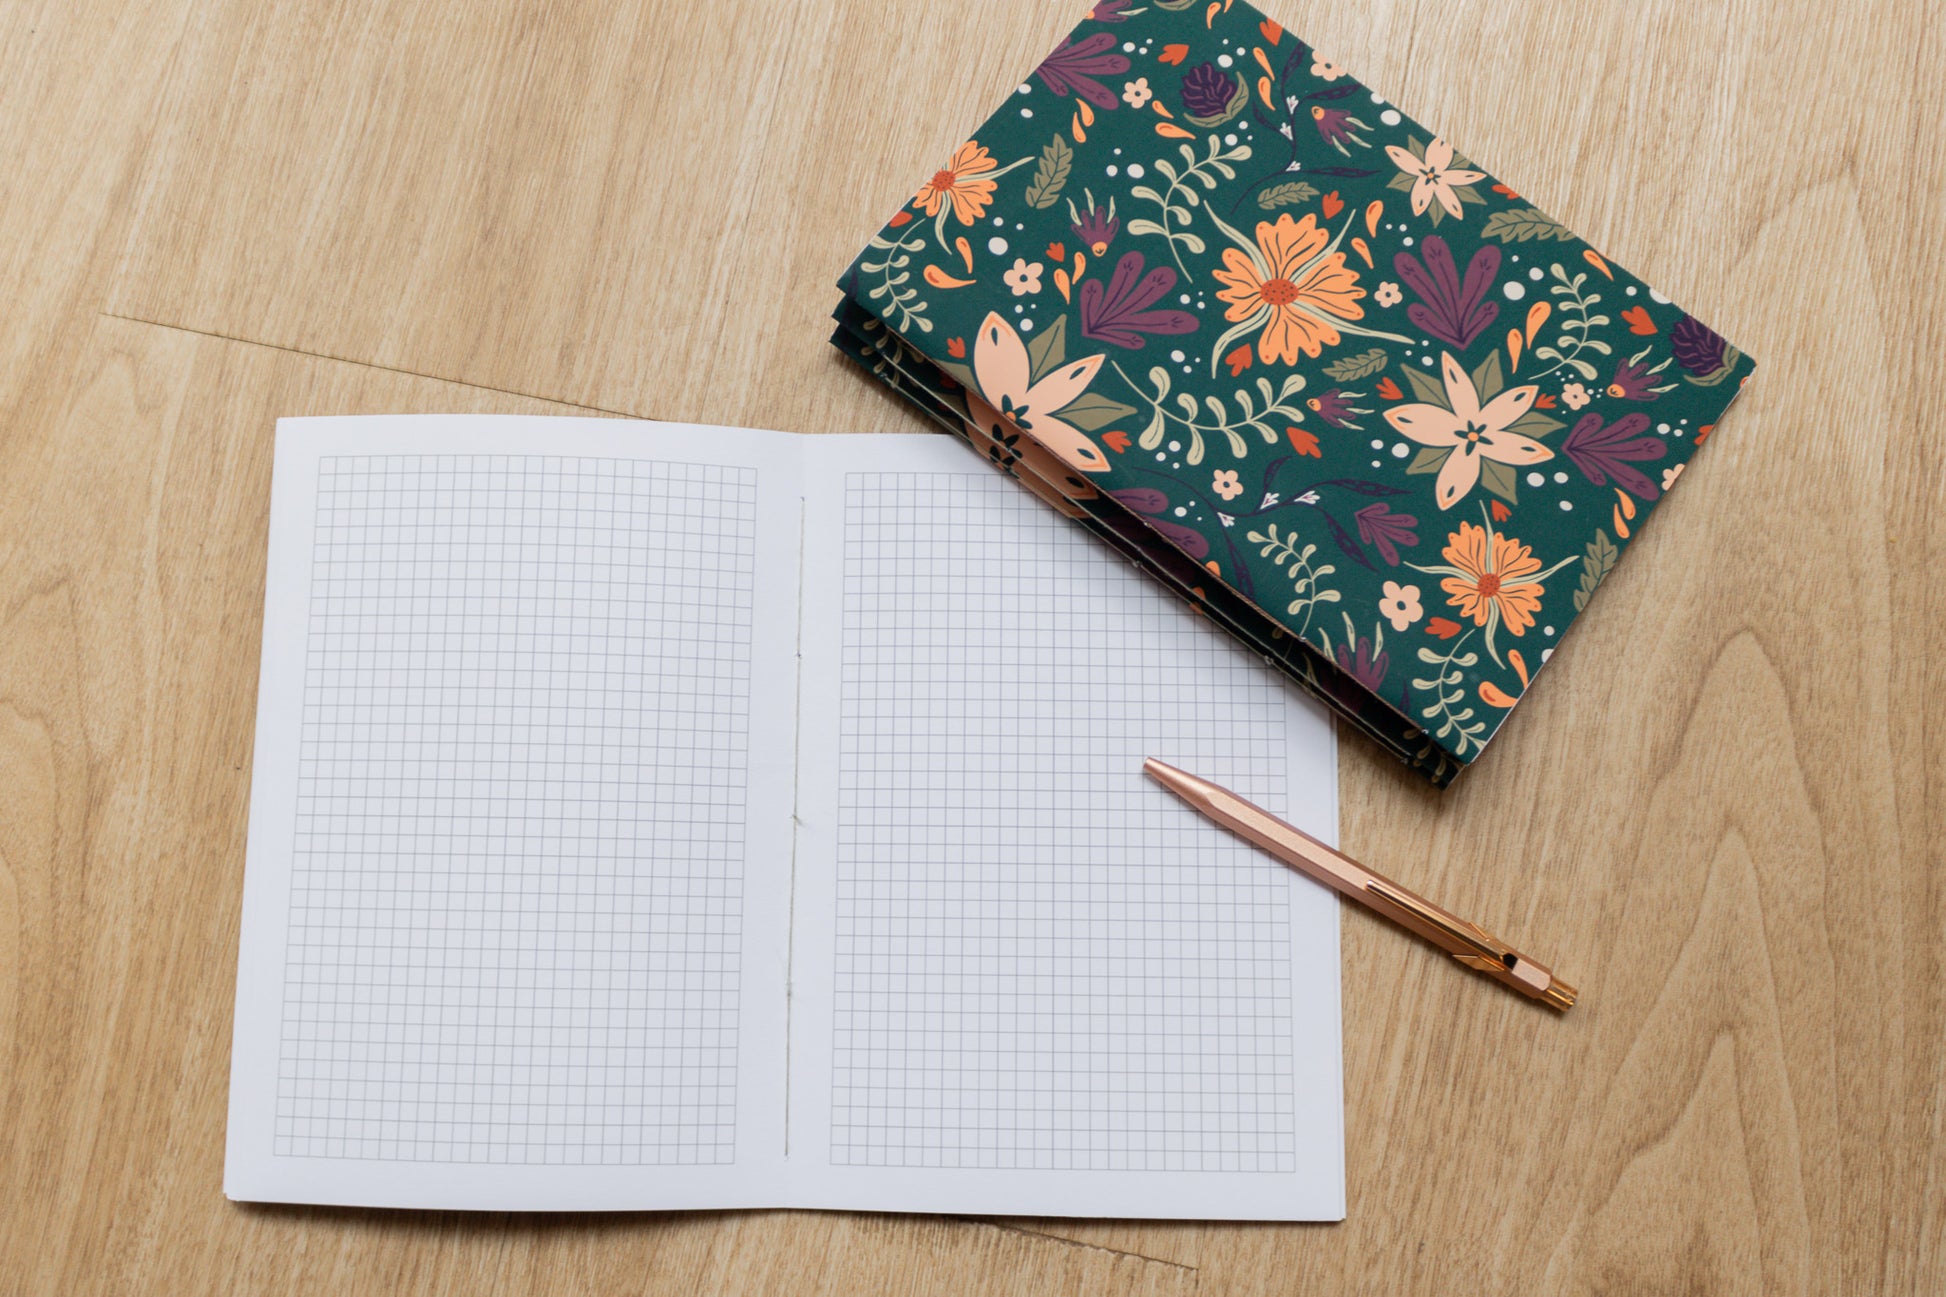 Handmade A5 notebook with autumnal floral design by MellowApricotStudio & KreativWerkstatt24 - squared inner